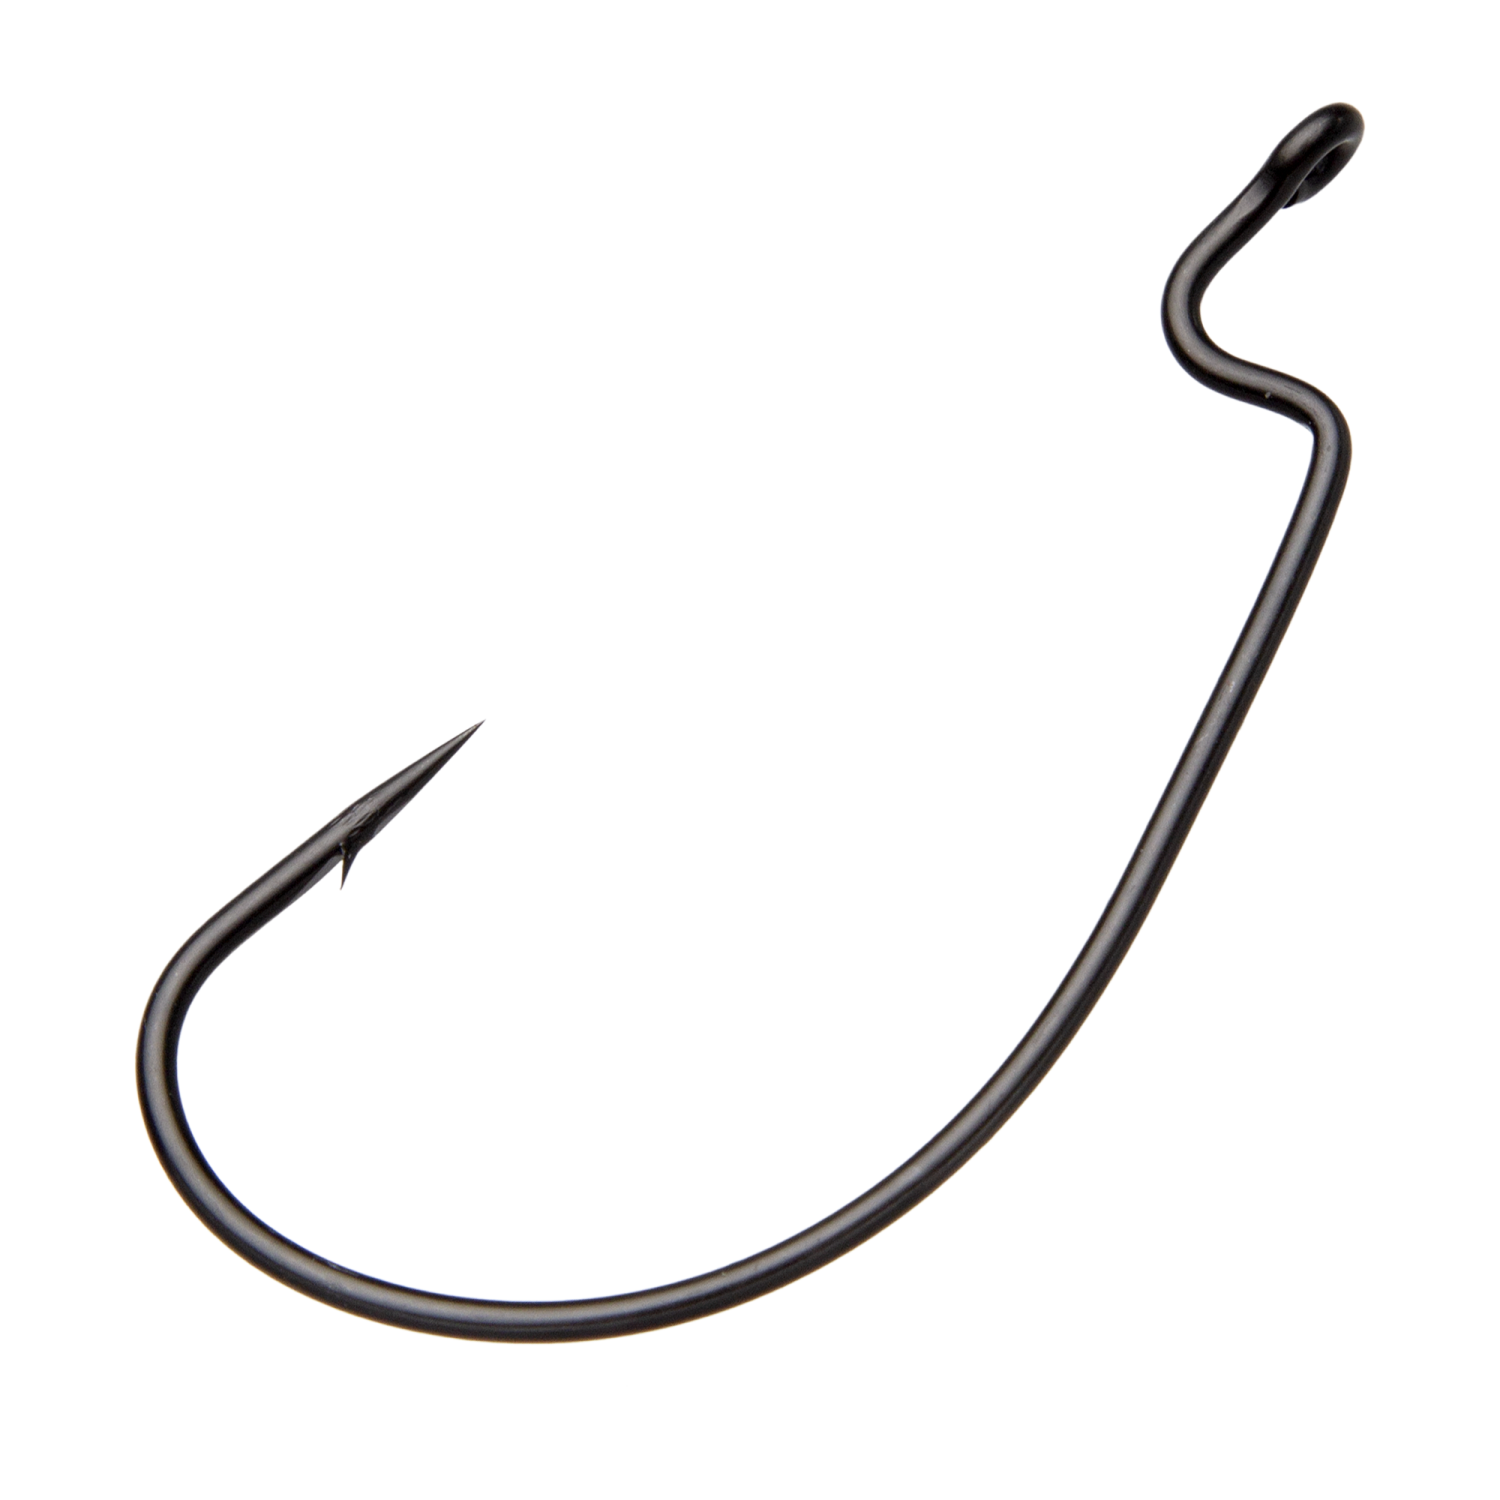 vanfook крючок офсетный vanfook worm 55b размер 6 0 4шт stealth black Крючок офсетный Vanfook Worm 55B #6/0 (4шт)